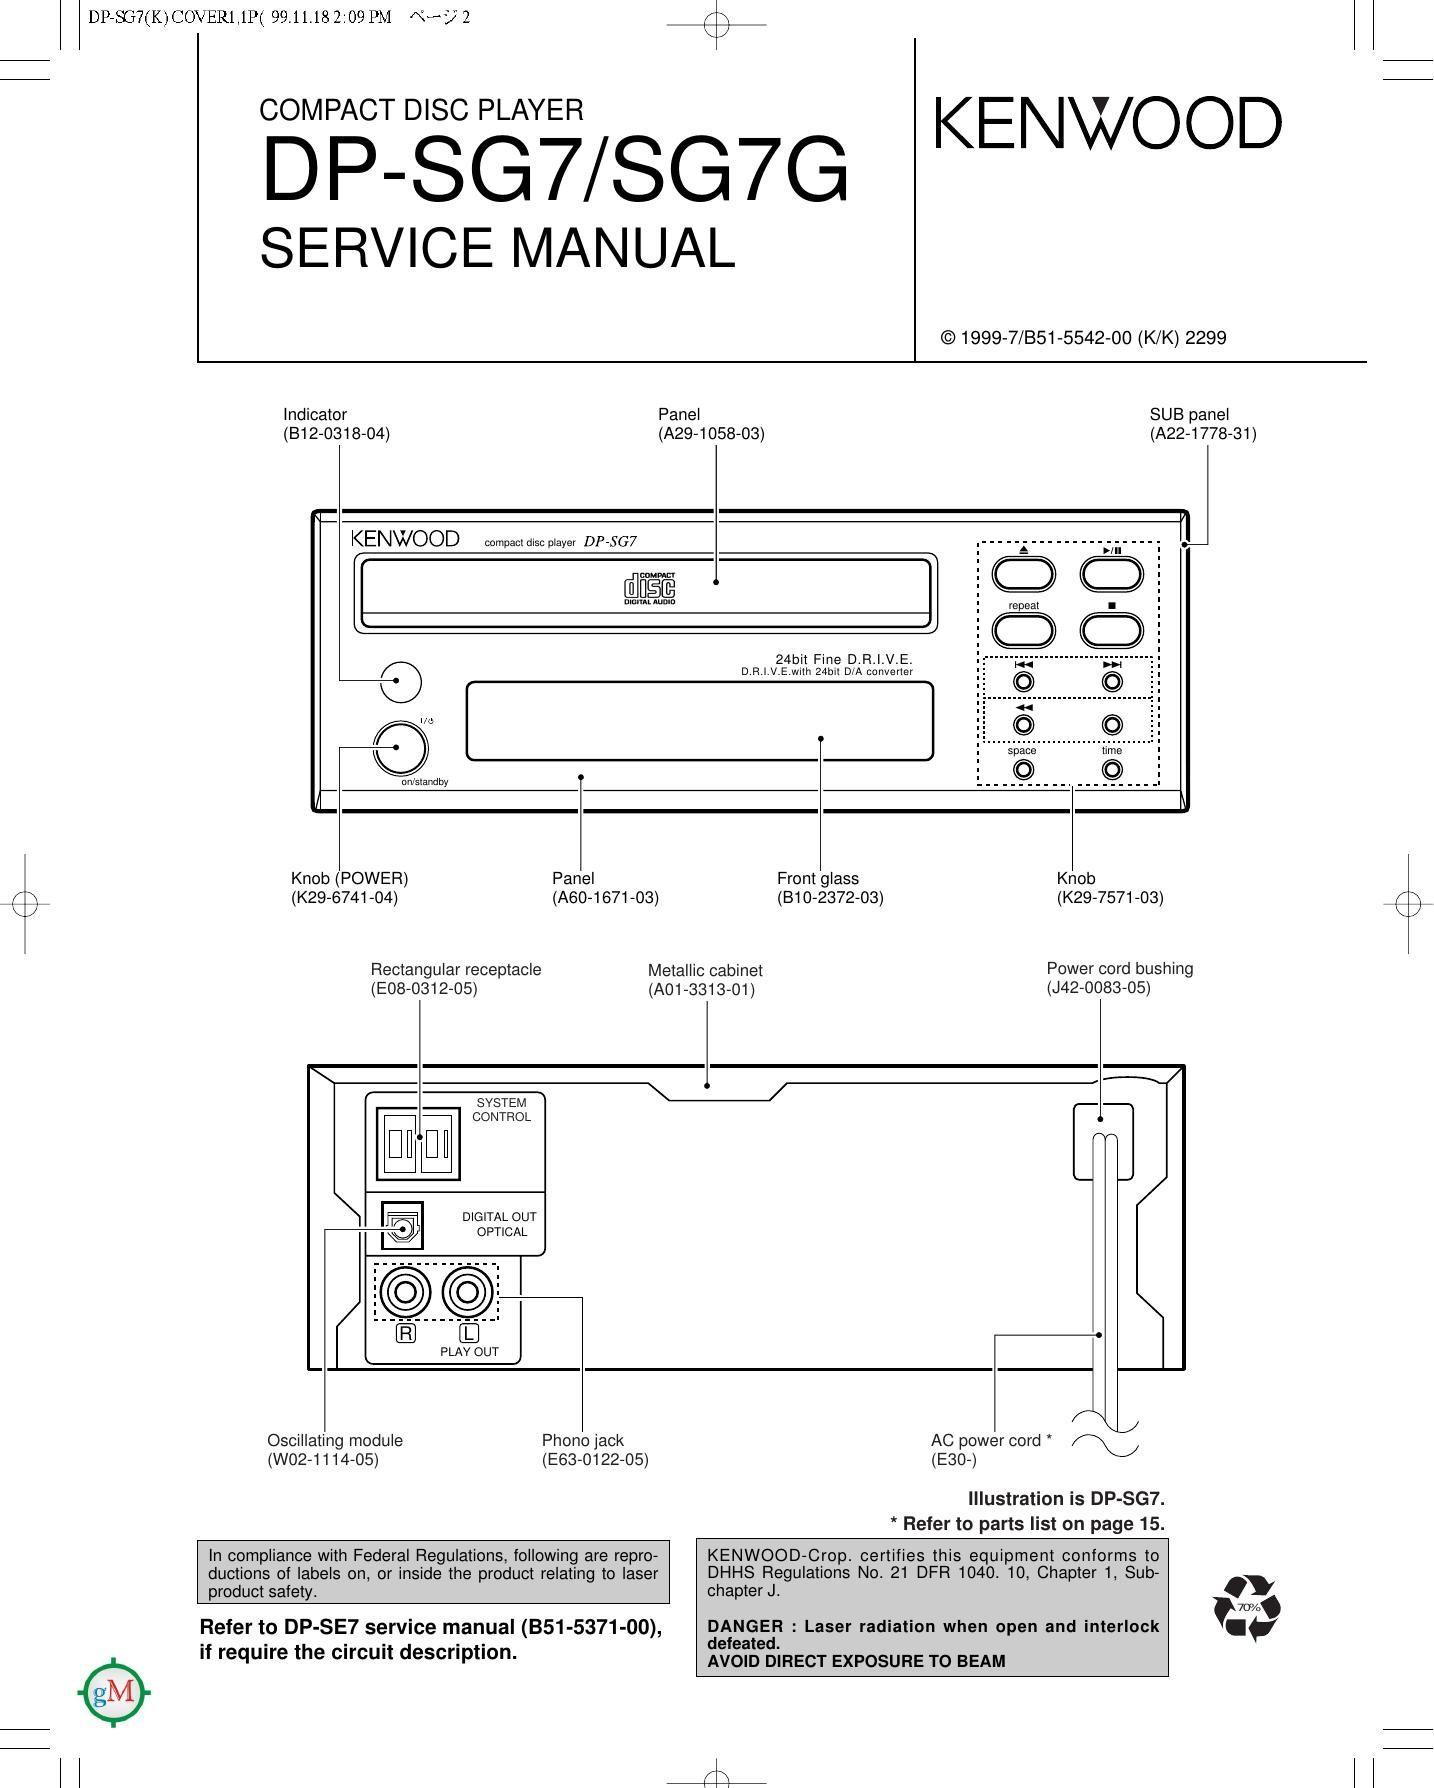 Kenwood DPSG 7 Service Manual